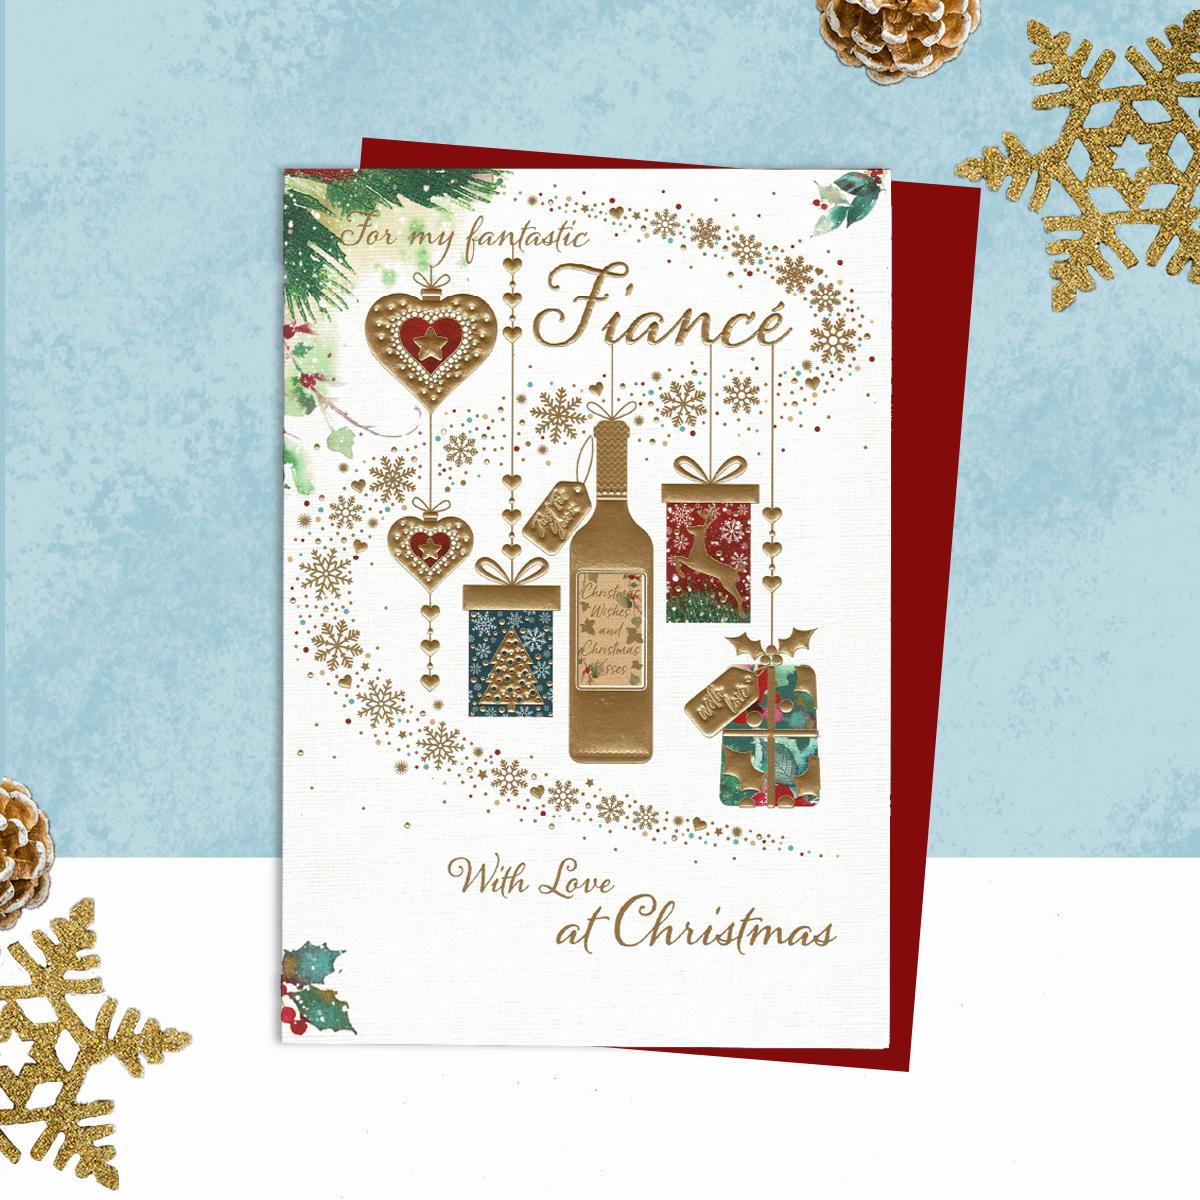 Fantastic Fiancé Christmas Card Alongside Its Red Envelope